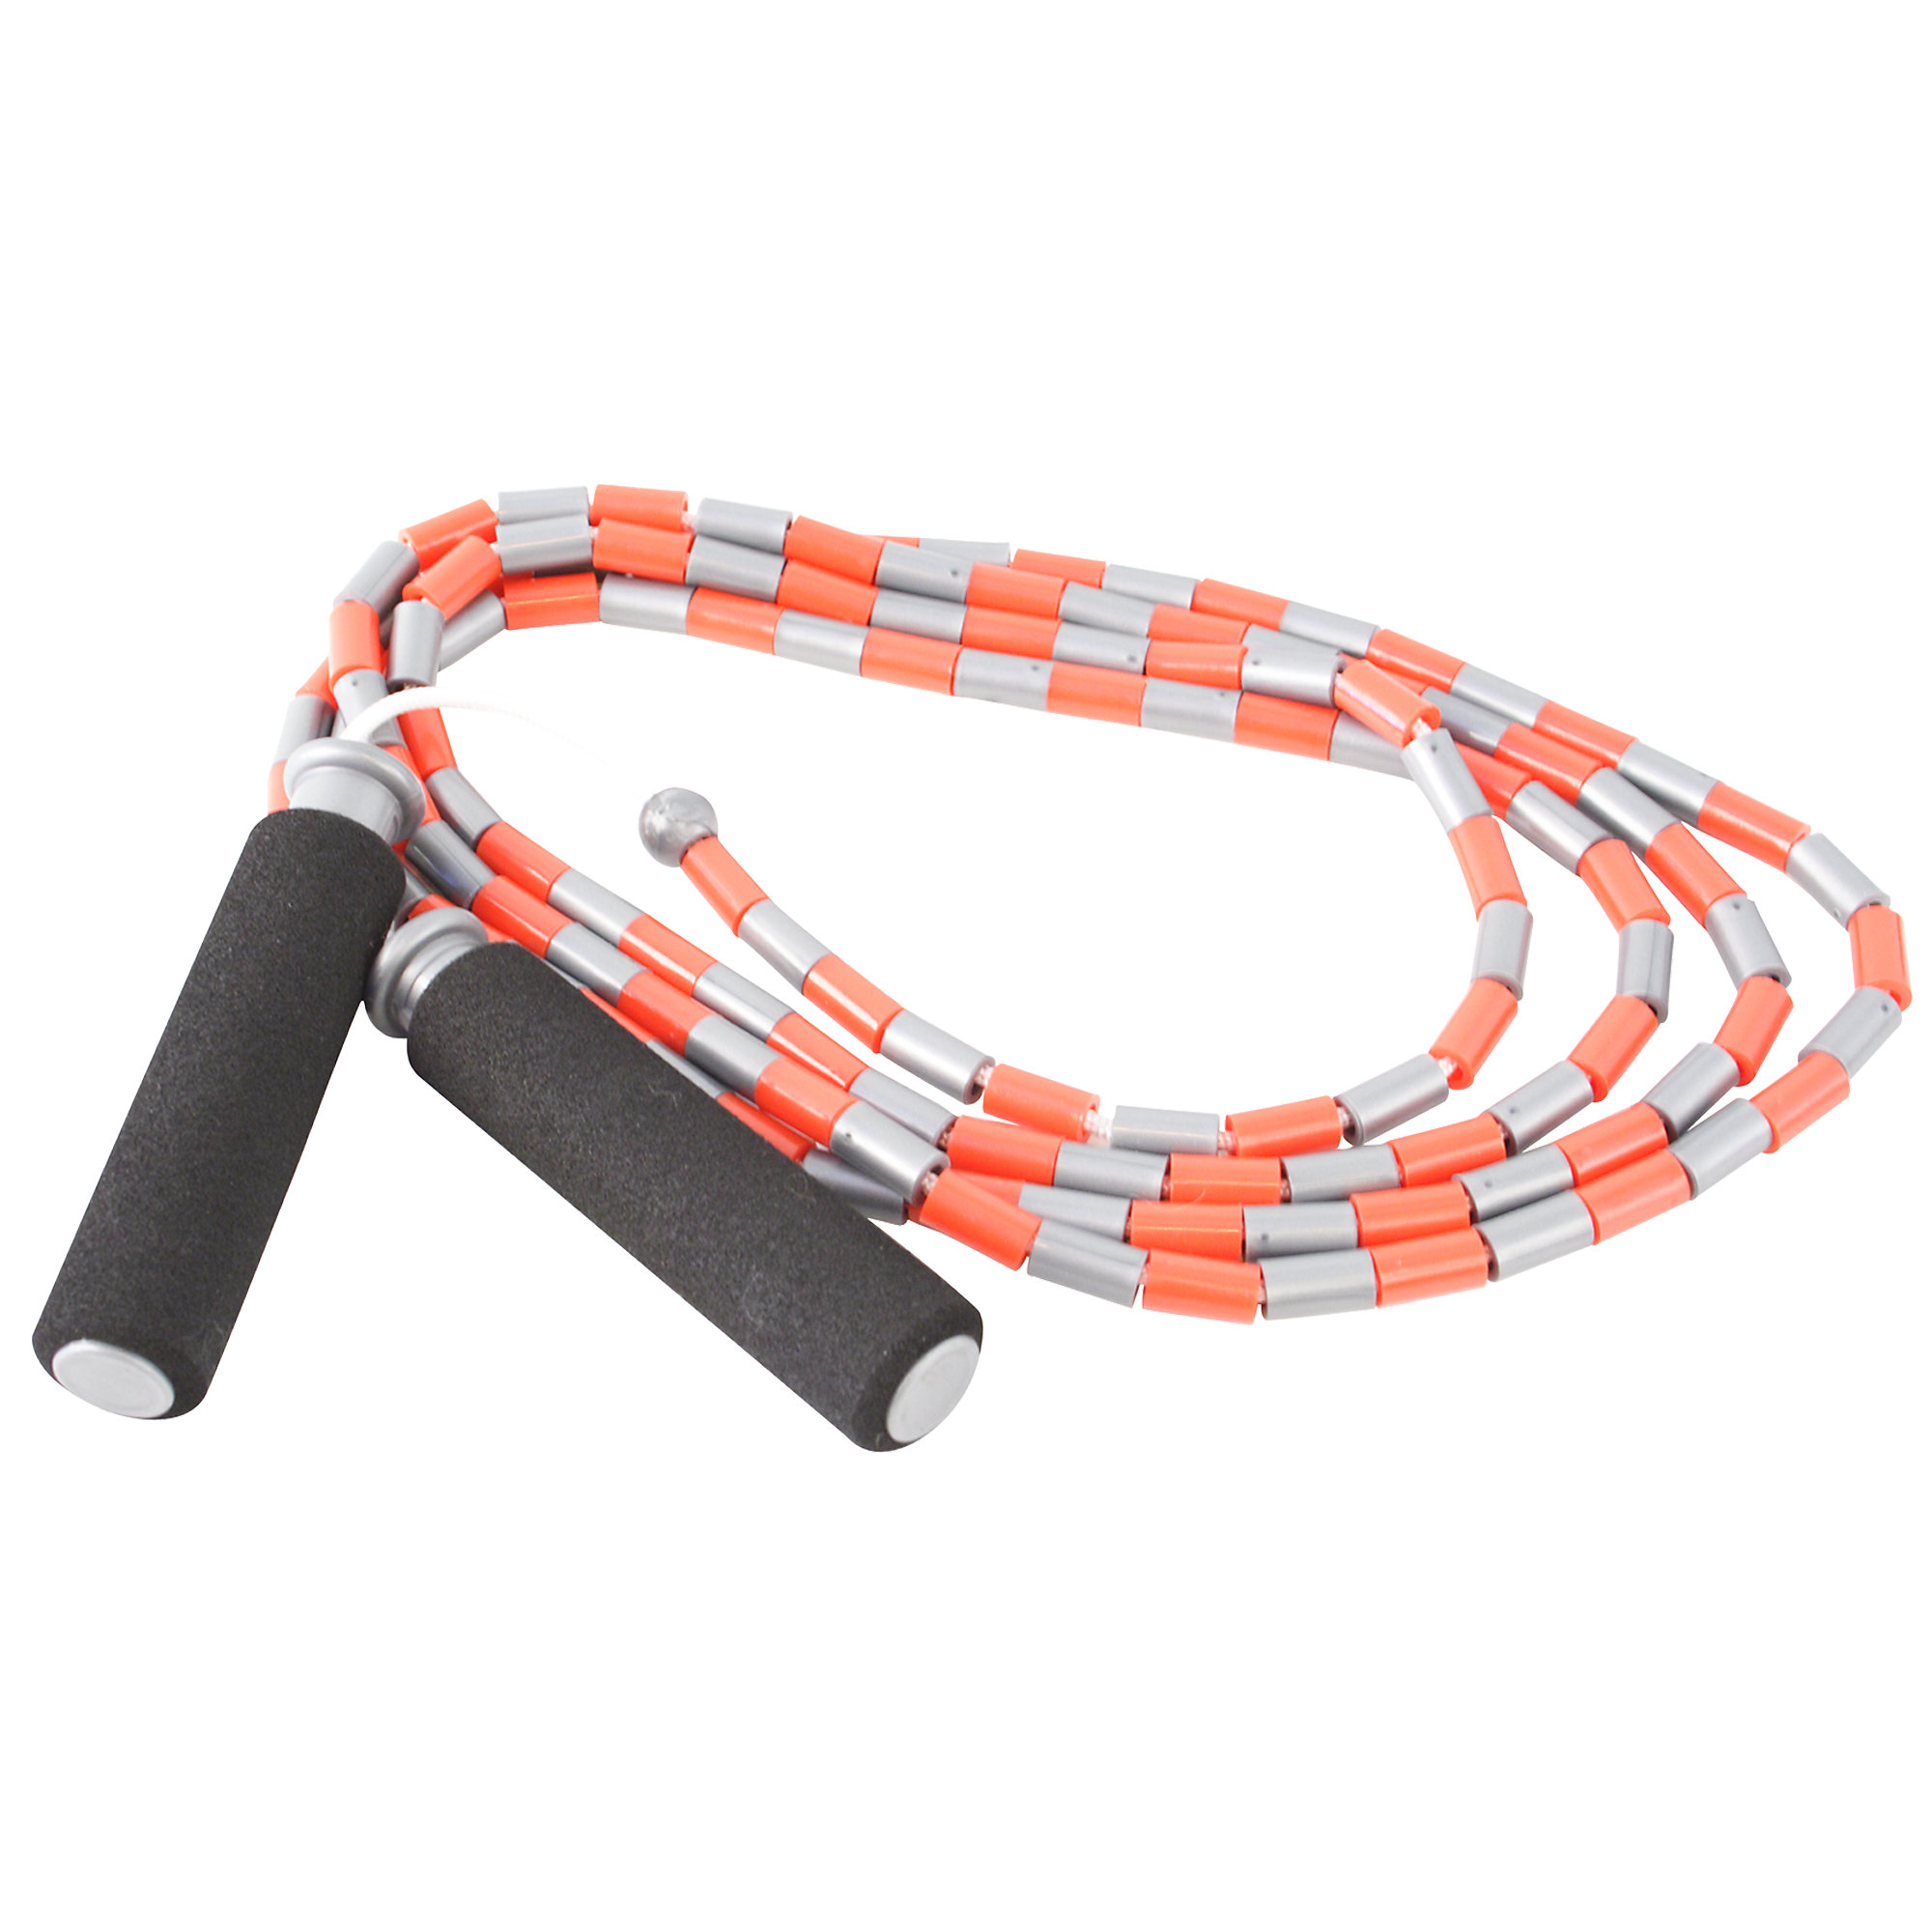 Beaded Jump Rope with Foam Handles, 9' Adjustable Length